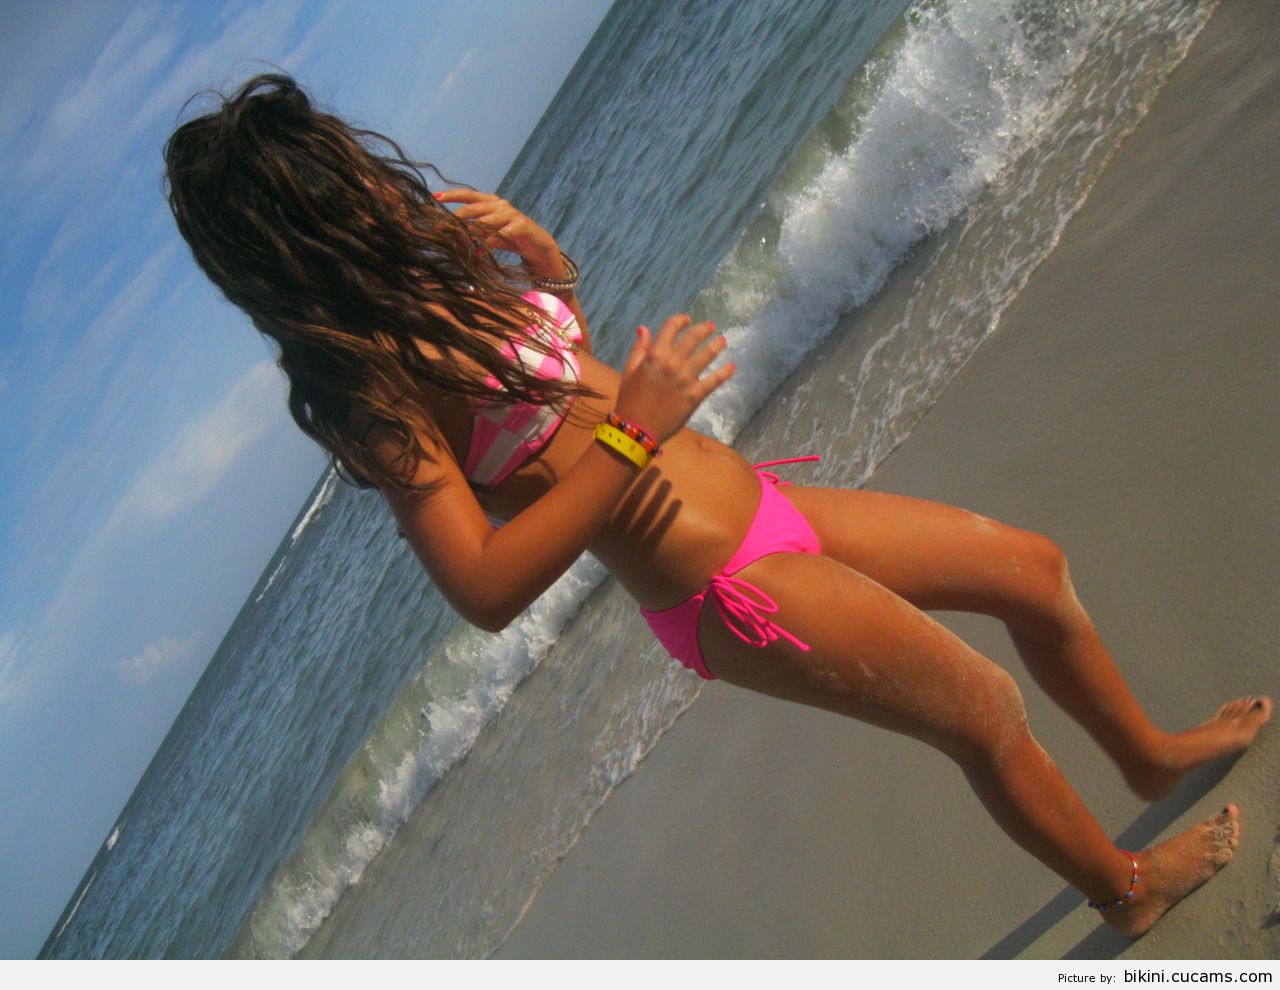 Bikini Farts Girlfriend by bikini.cucams.com